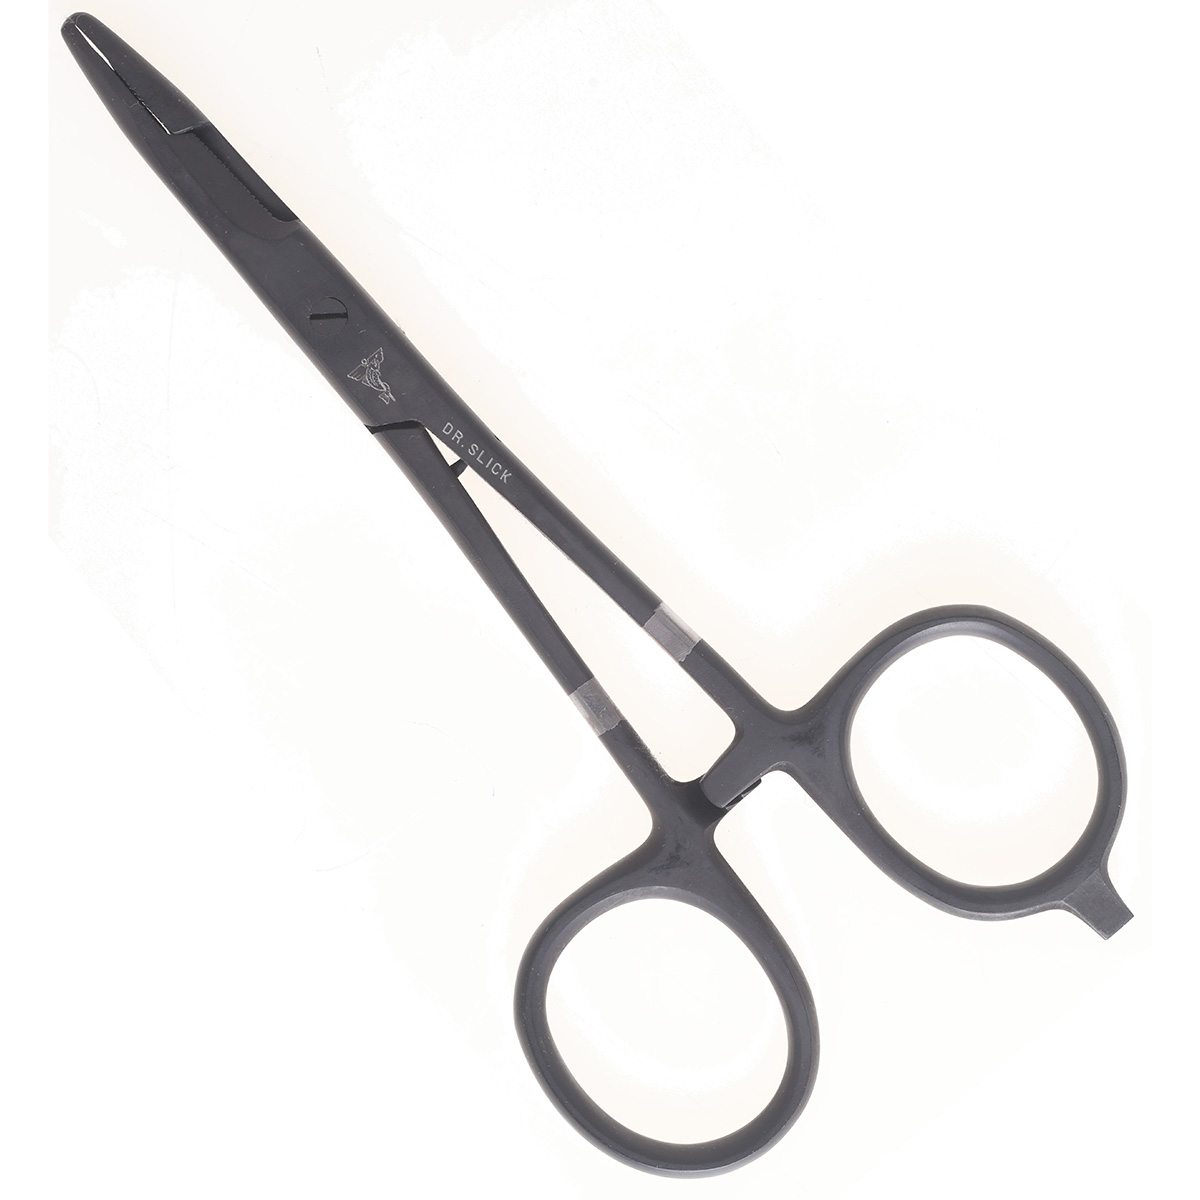 Dr Slick Black 5.5 inch Scissor Clamp